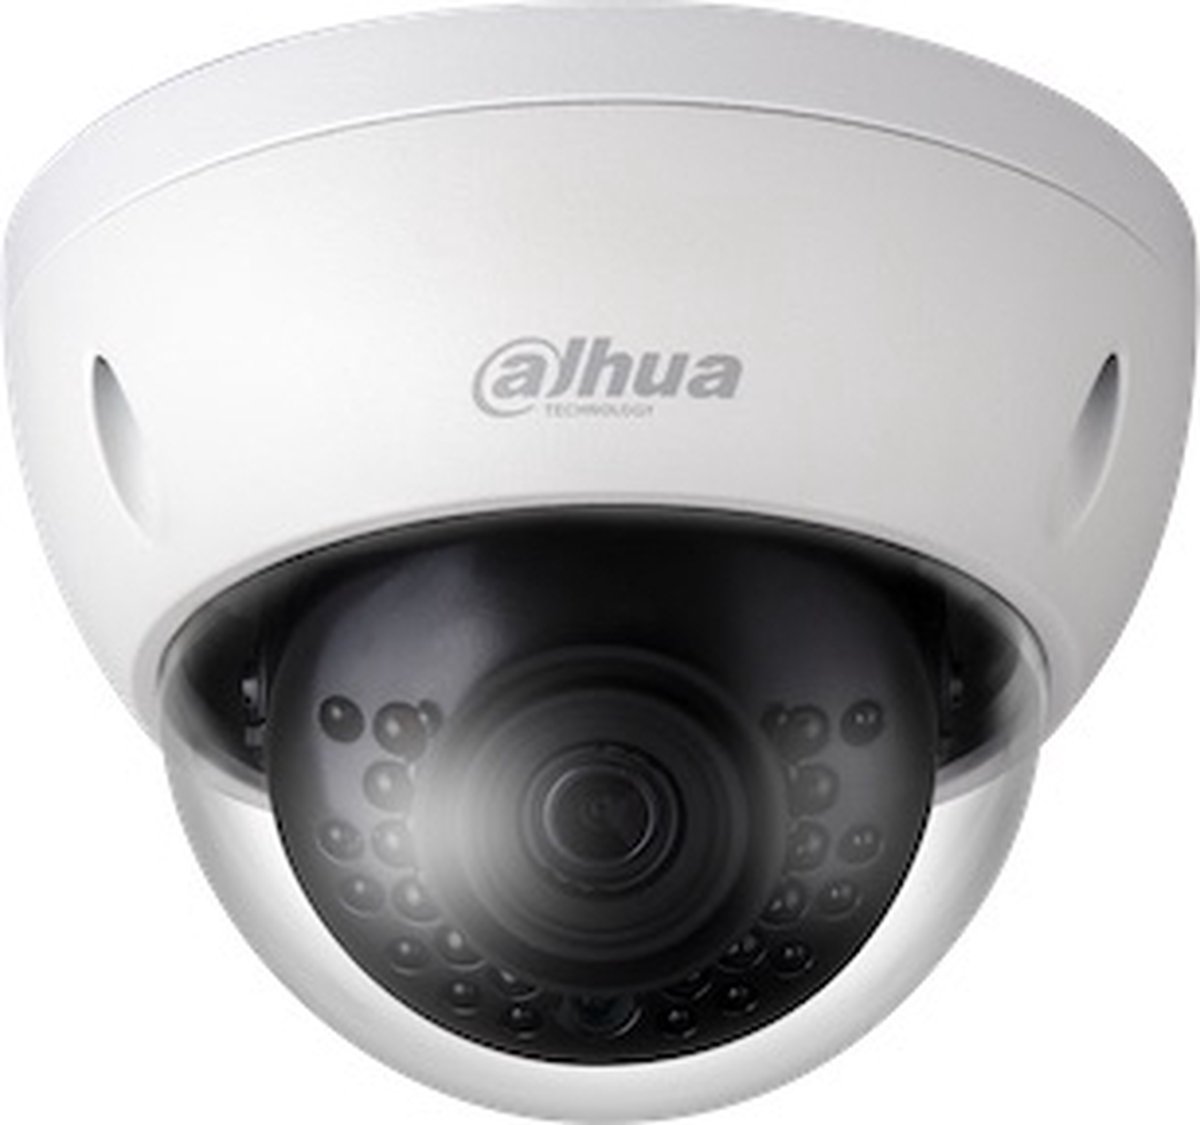 Dahua IPC-HDBW1230E-S Full HD 2MP mini dome camera met IR nachtzicht en microSD opname - Beveiligingscamera IP camera bewakingscamera camerabewaking veiligheidscamera beveiliging netwerk camera webcam